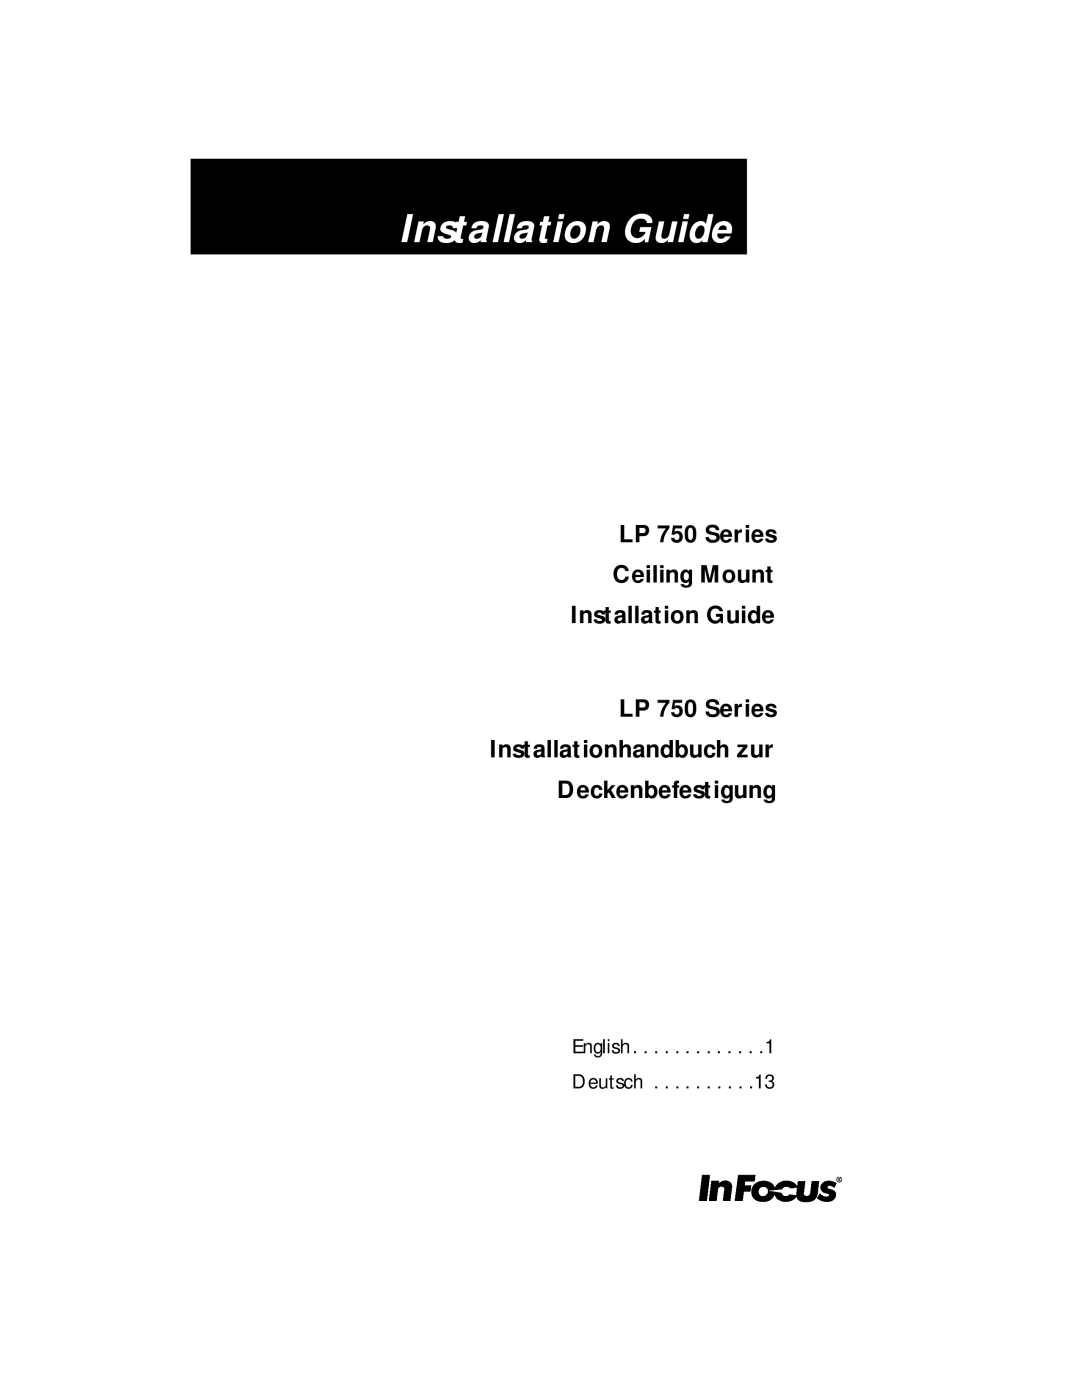 InFocus LP750 manual LP 750 Series Ceiling Mount Installation Guide, English . . . . . . . . . . . . .1 Deutsch 